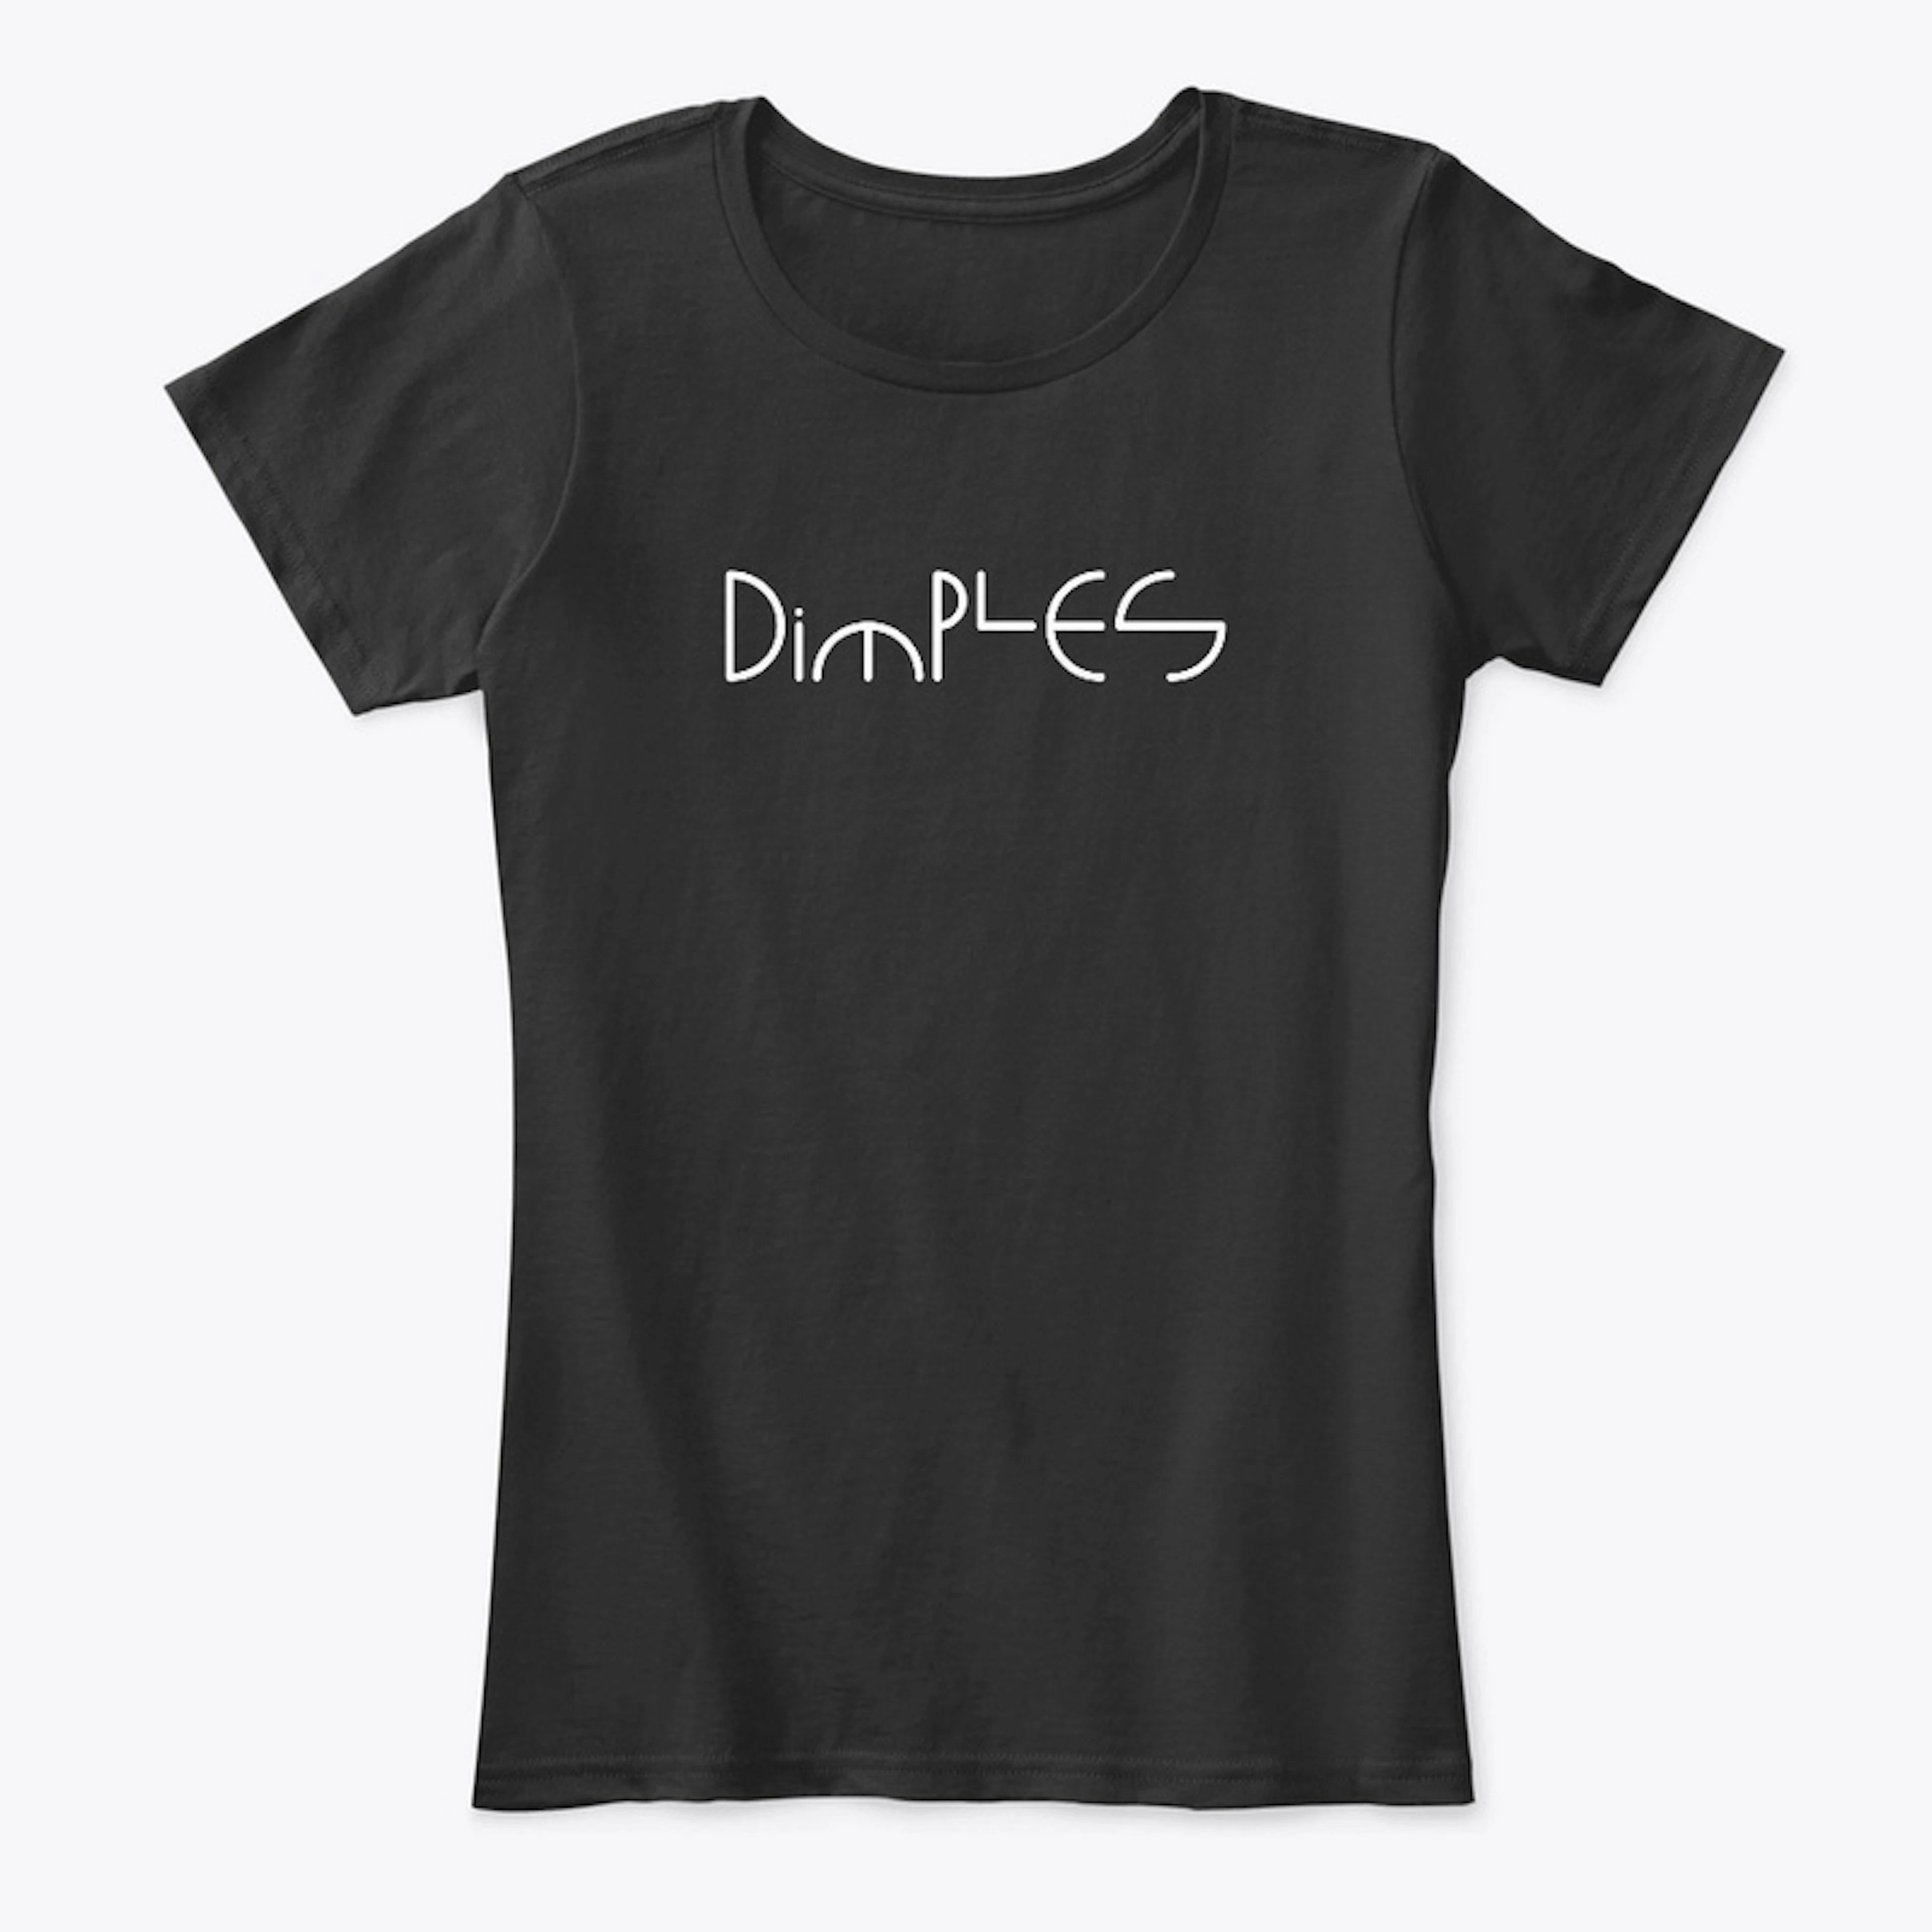 Designer Dimples